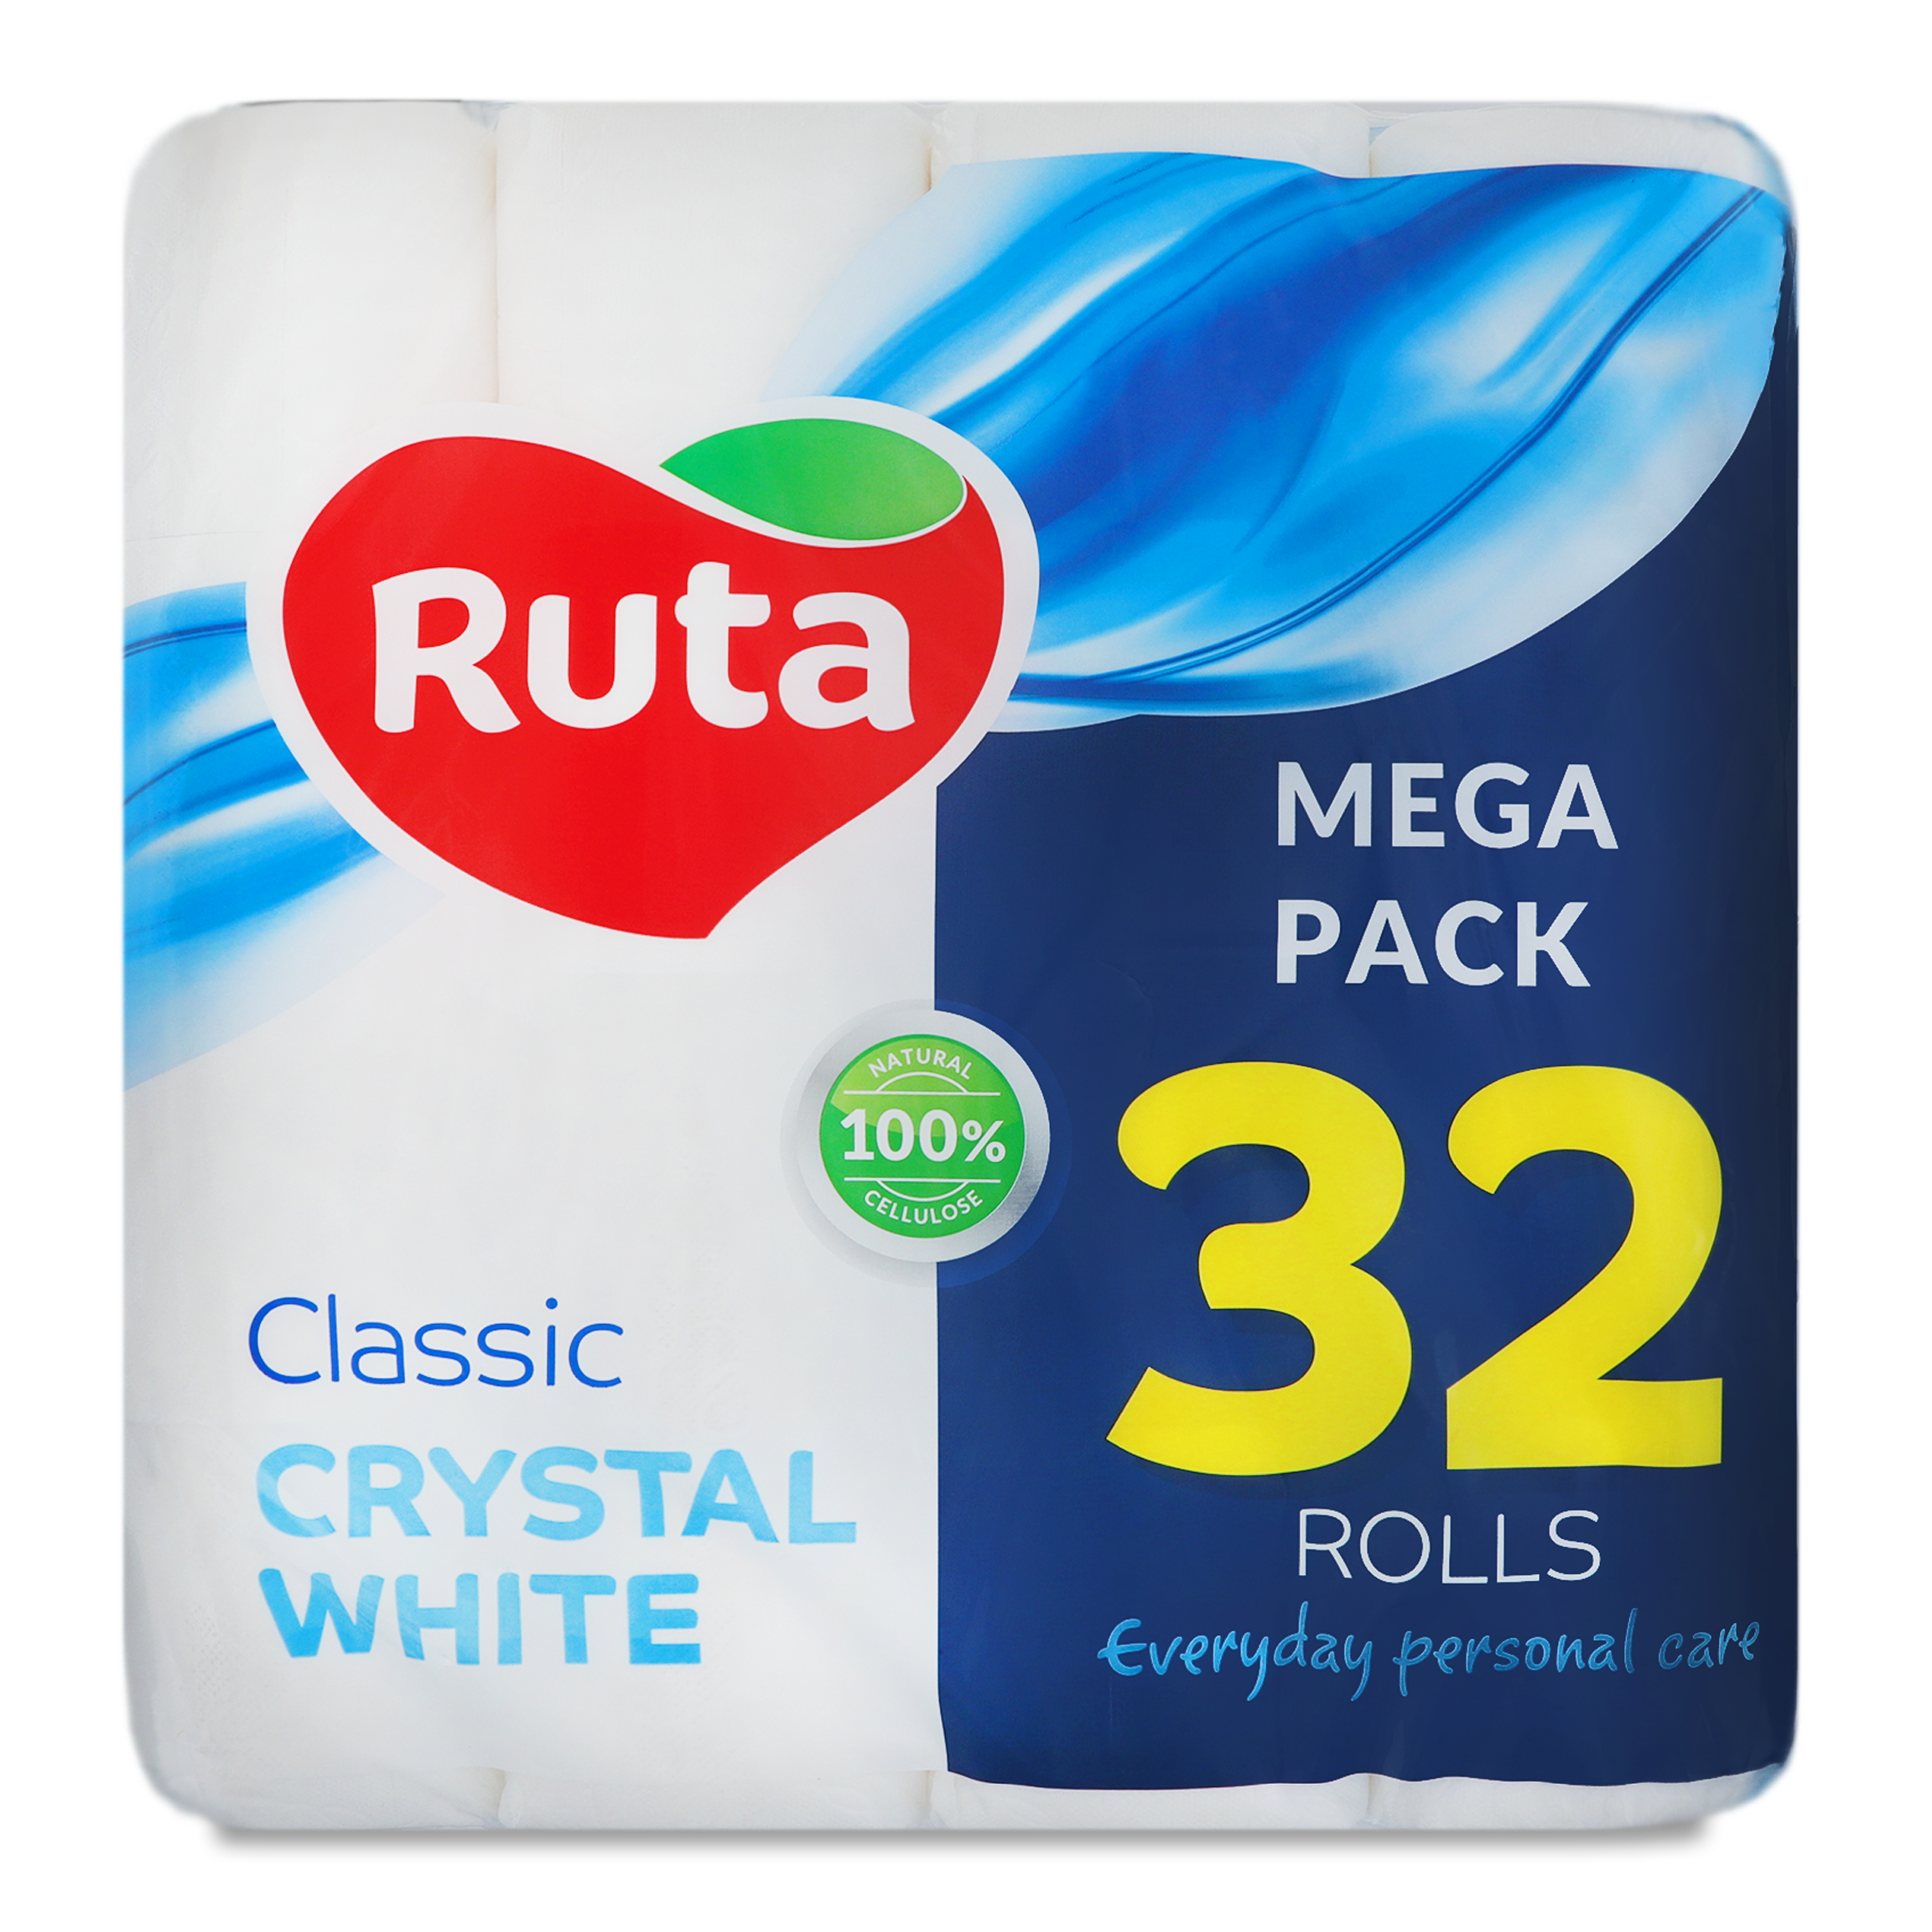 Ruta Classic White Two-Ply Toilte Paper 32 Rolls
